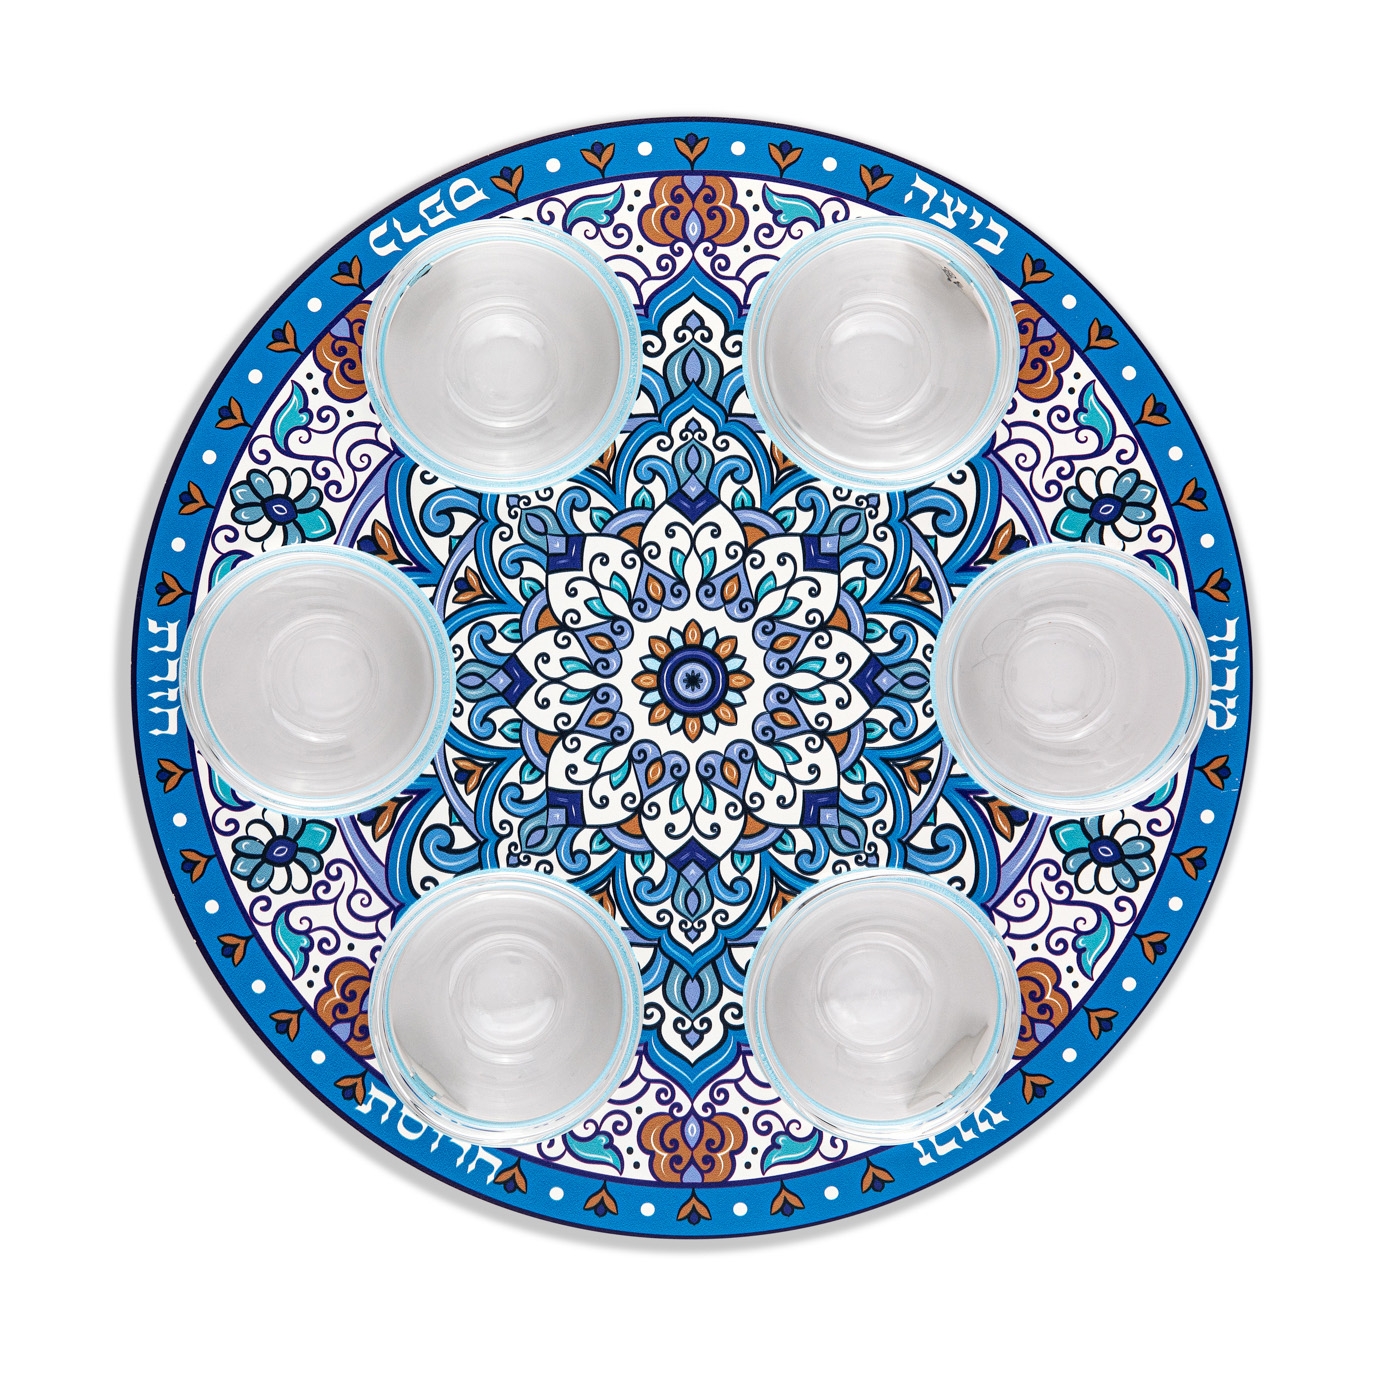 Seder Plate With Blue and Orange Flower Design By Dorit Judaica - 1